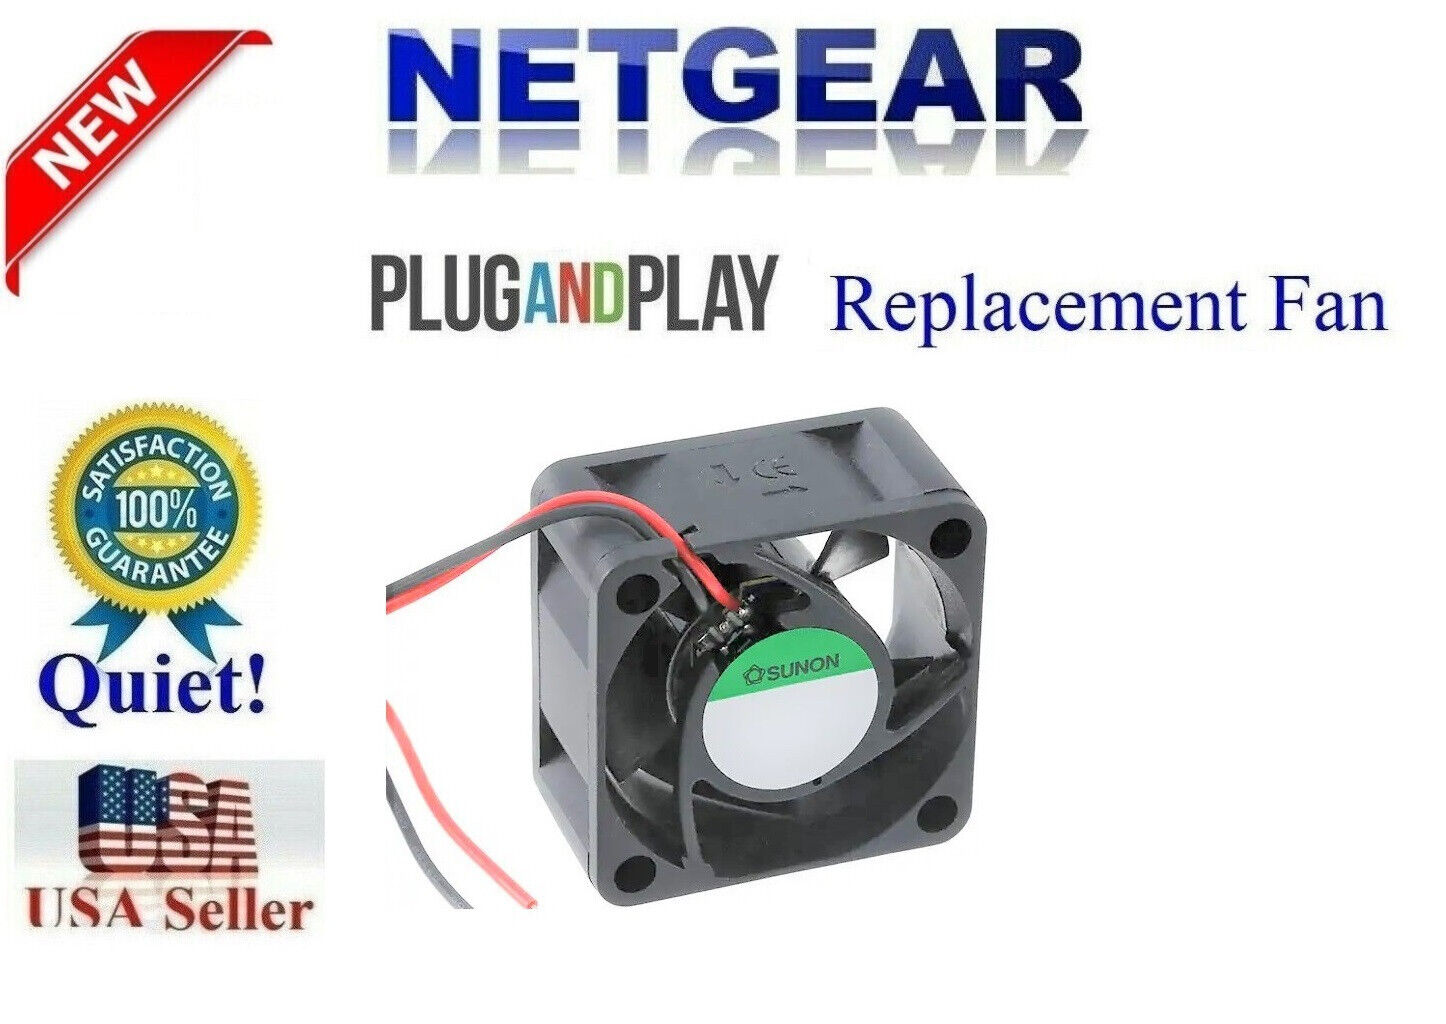 1x Quiet Sunon replacement fan for Netgear JGS516, DS516, FE516, FS524 Low Noise